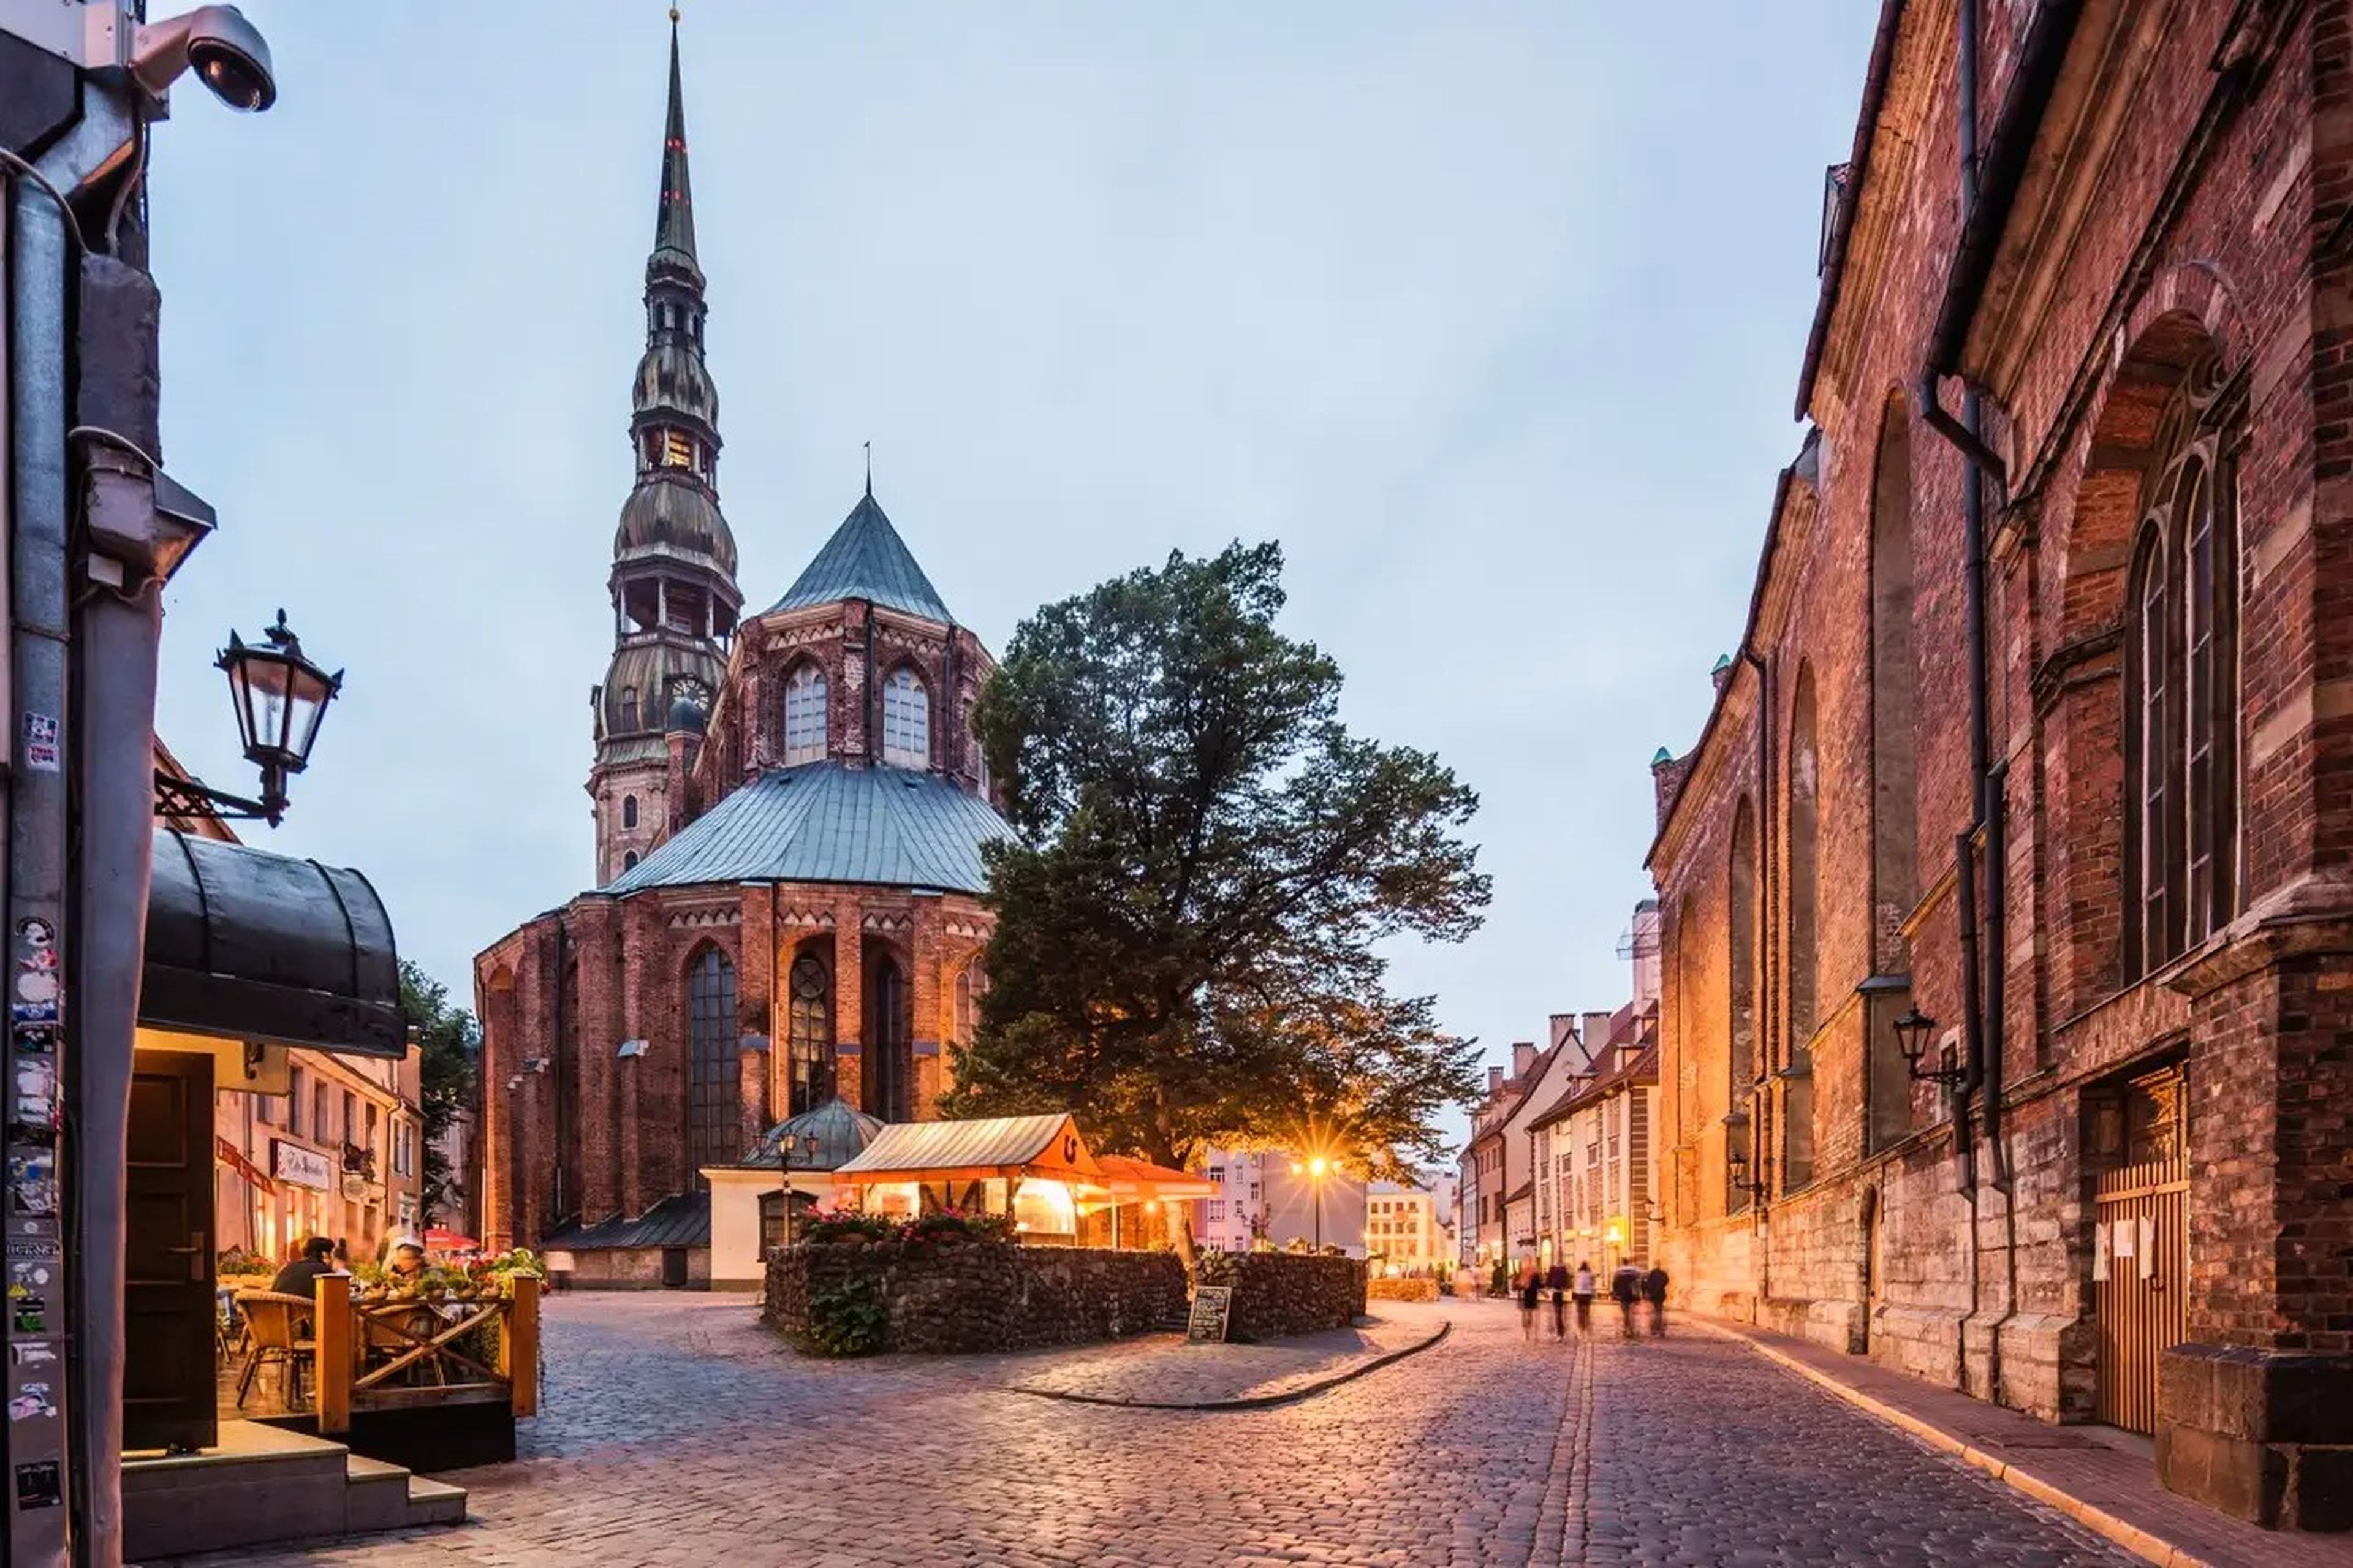 Downtown cobblestone streets near a church in Riga, Latvia